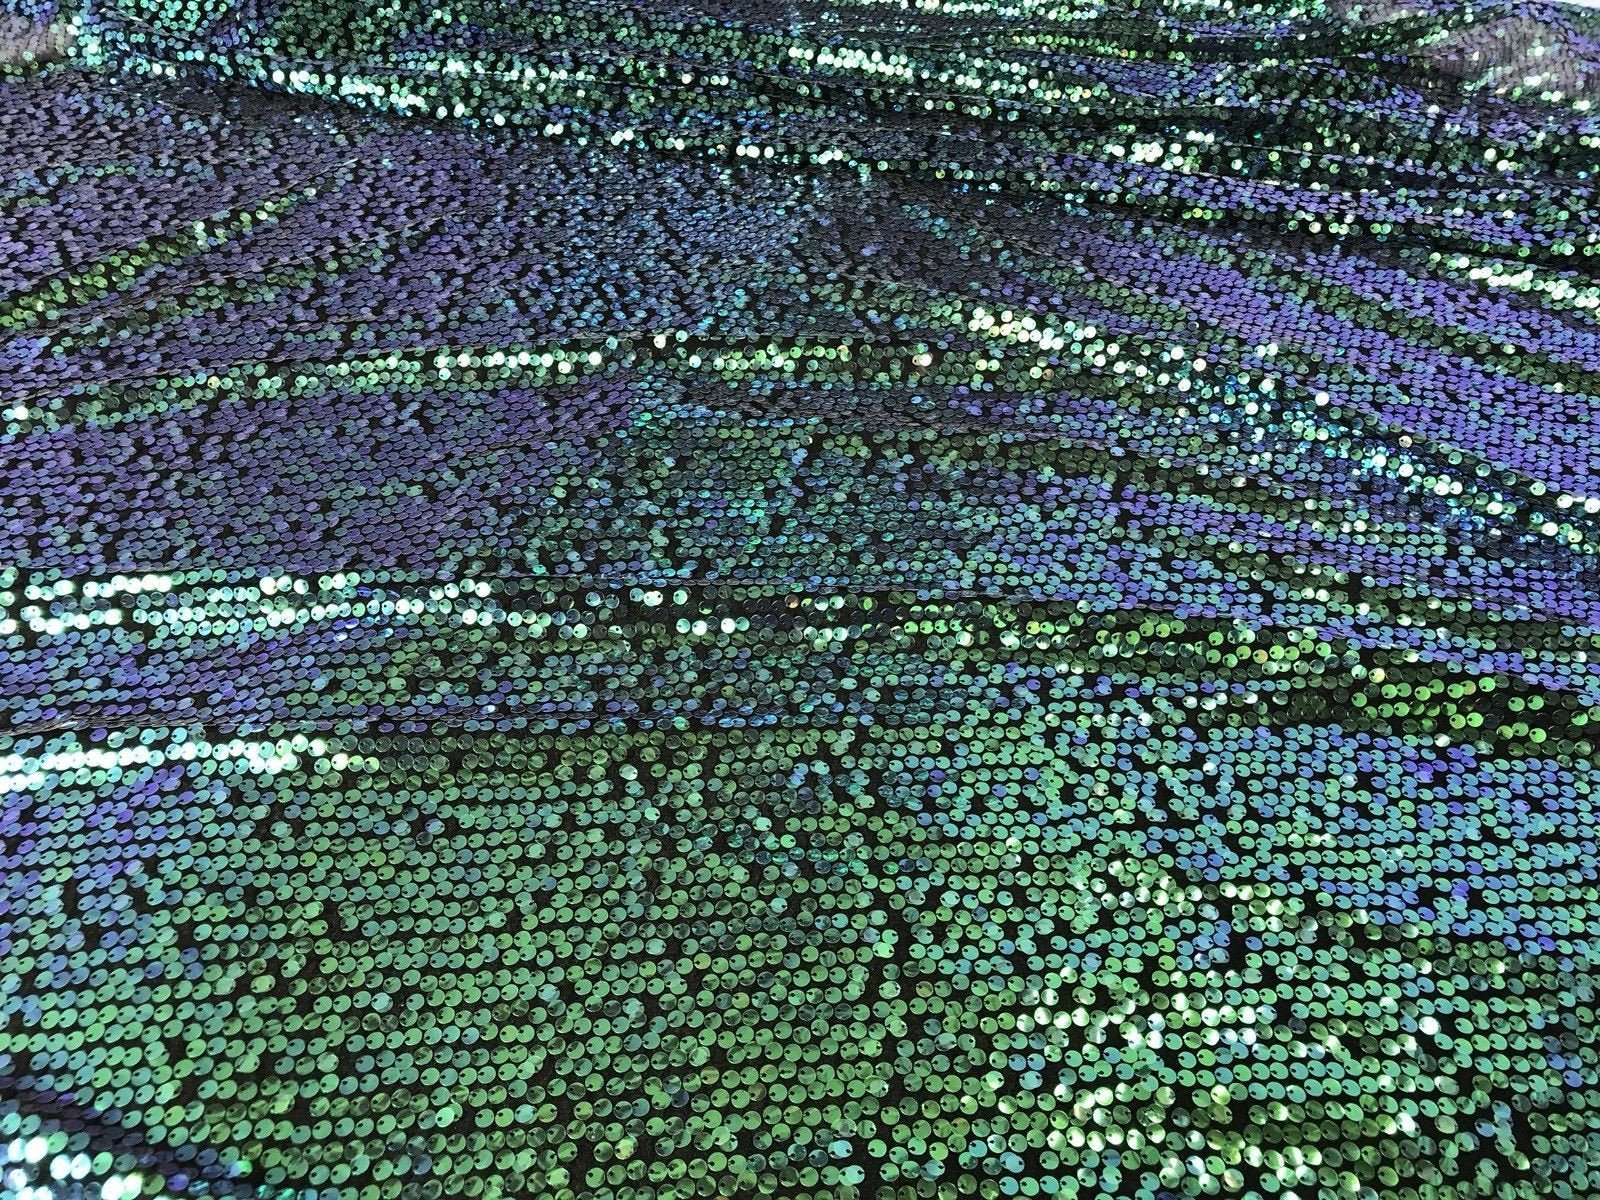 Wedding Top green Sequins mesh lace dress fabric Fashion Prom dress by yardICE FABRICSICE FABRICSWedding Top green Sequins mesh lace dress fabric Fashion Prom dress by yard ICE FABRICS